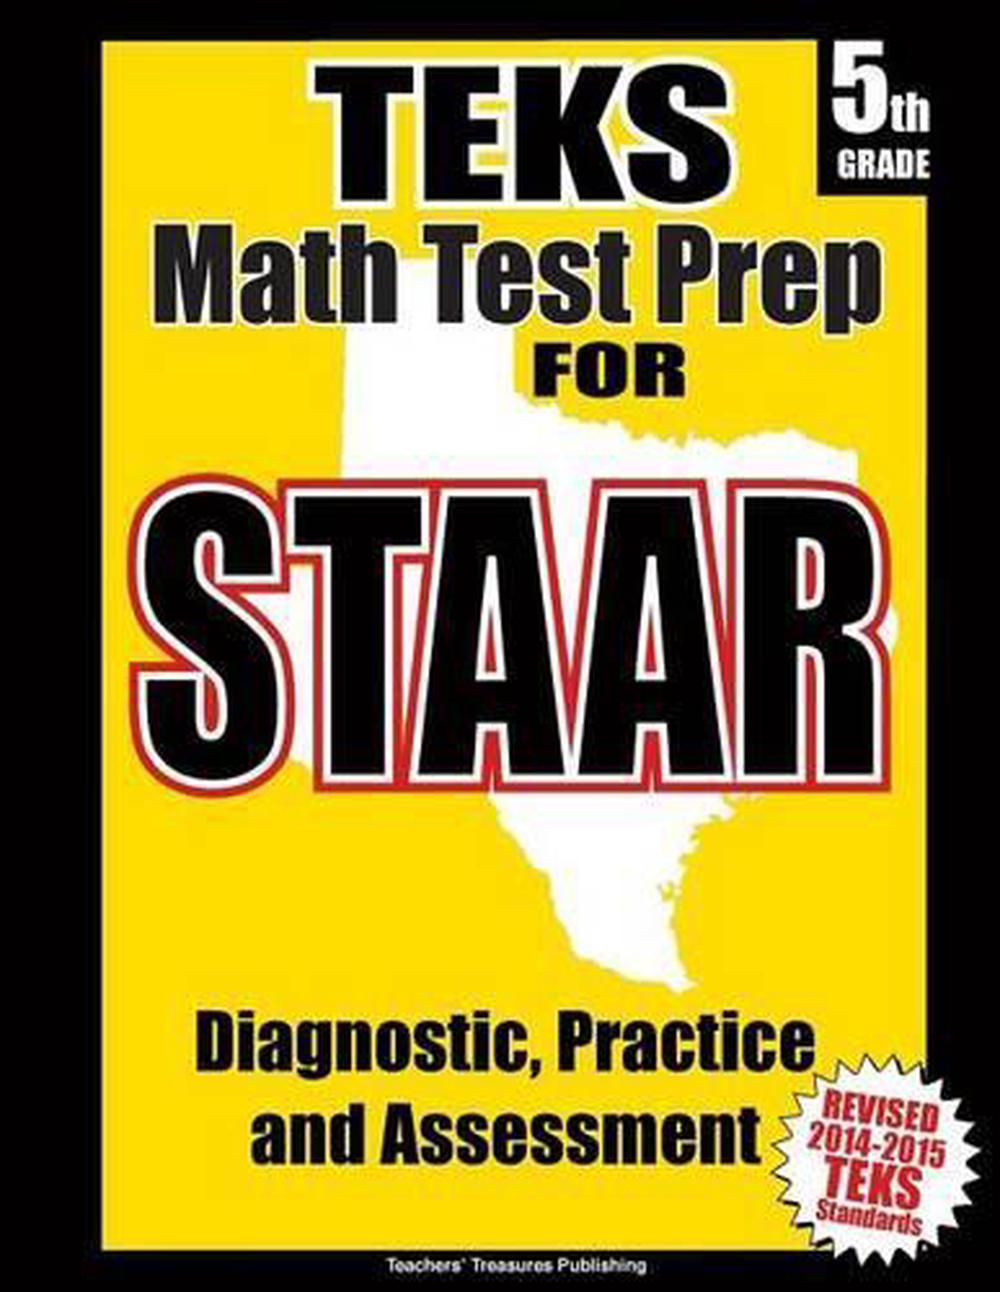 teks-5th-grade-math-test-prep-for-staar-by-teachers-treasures-english-paperba-ebay